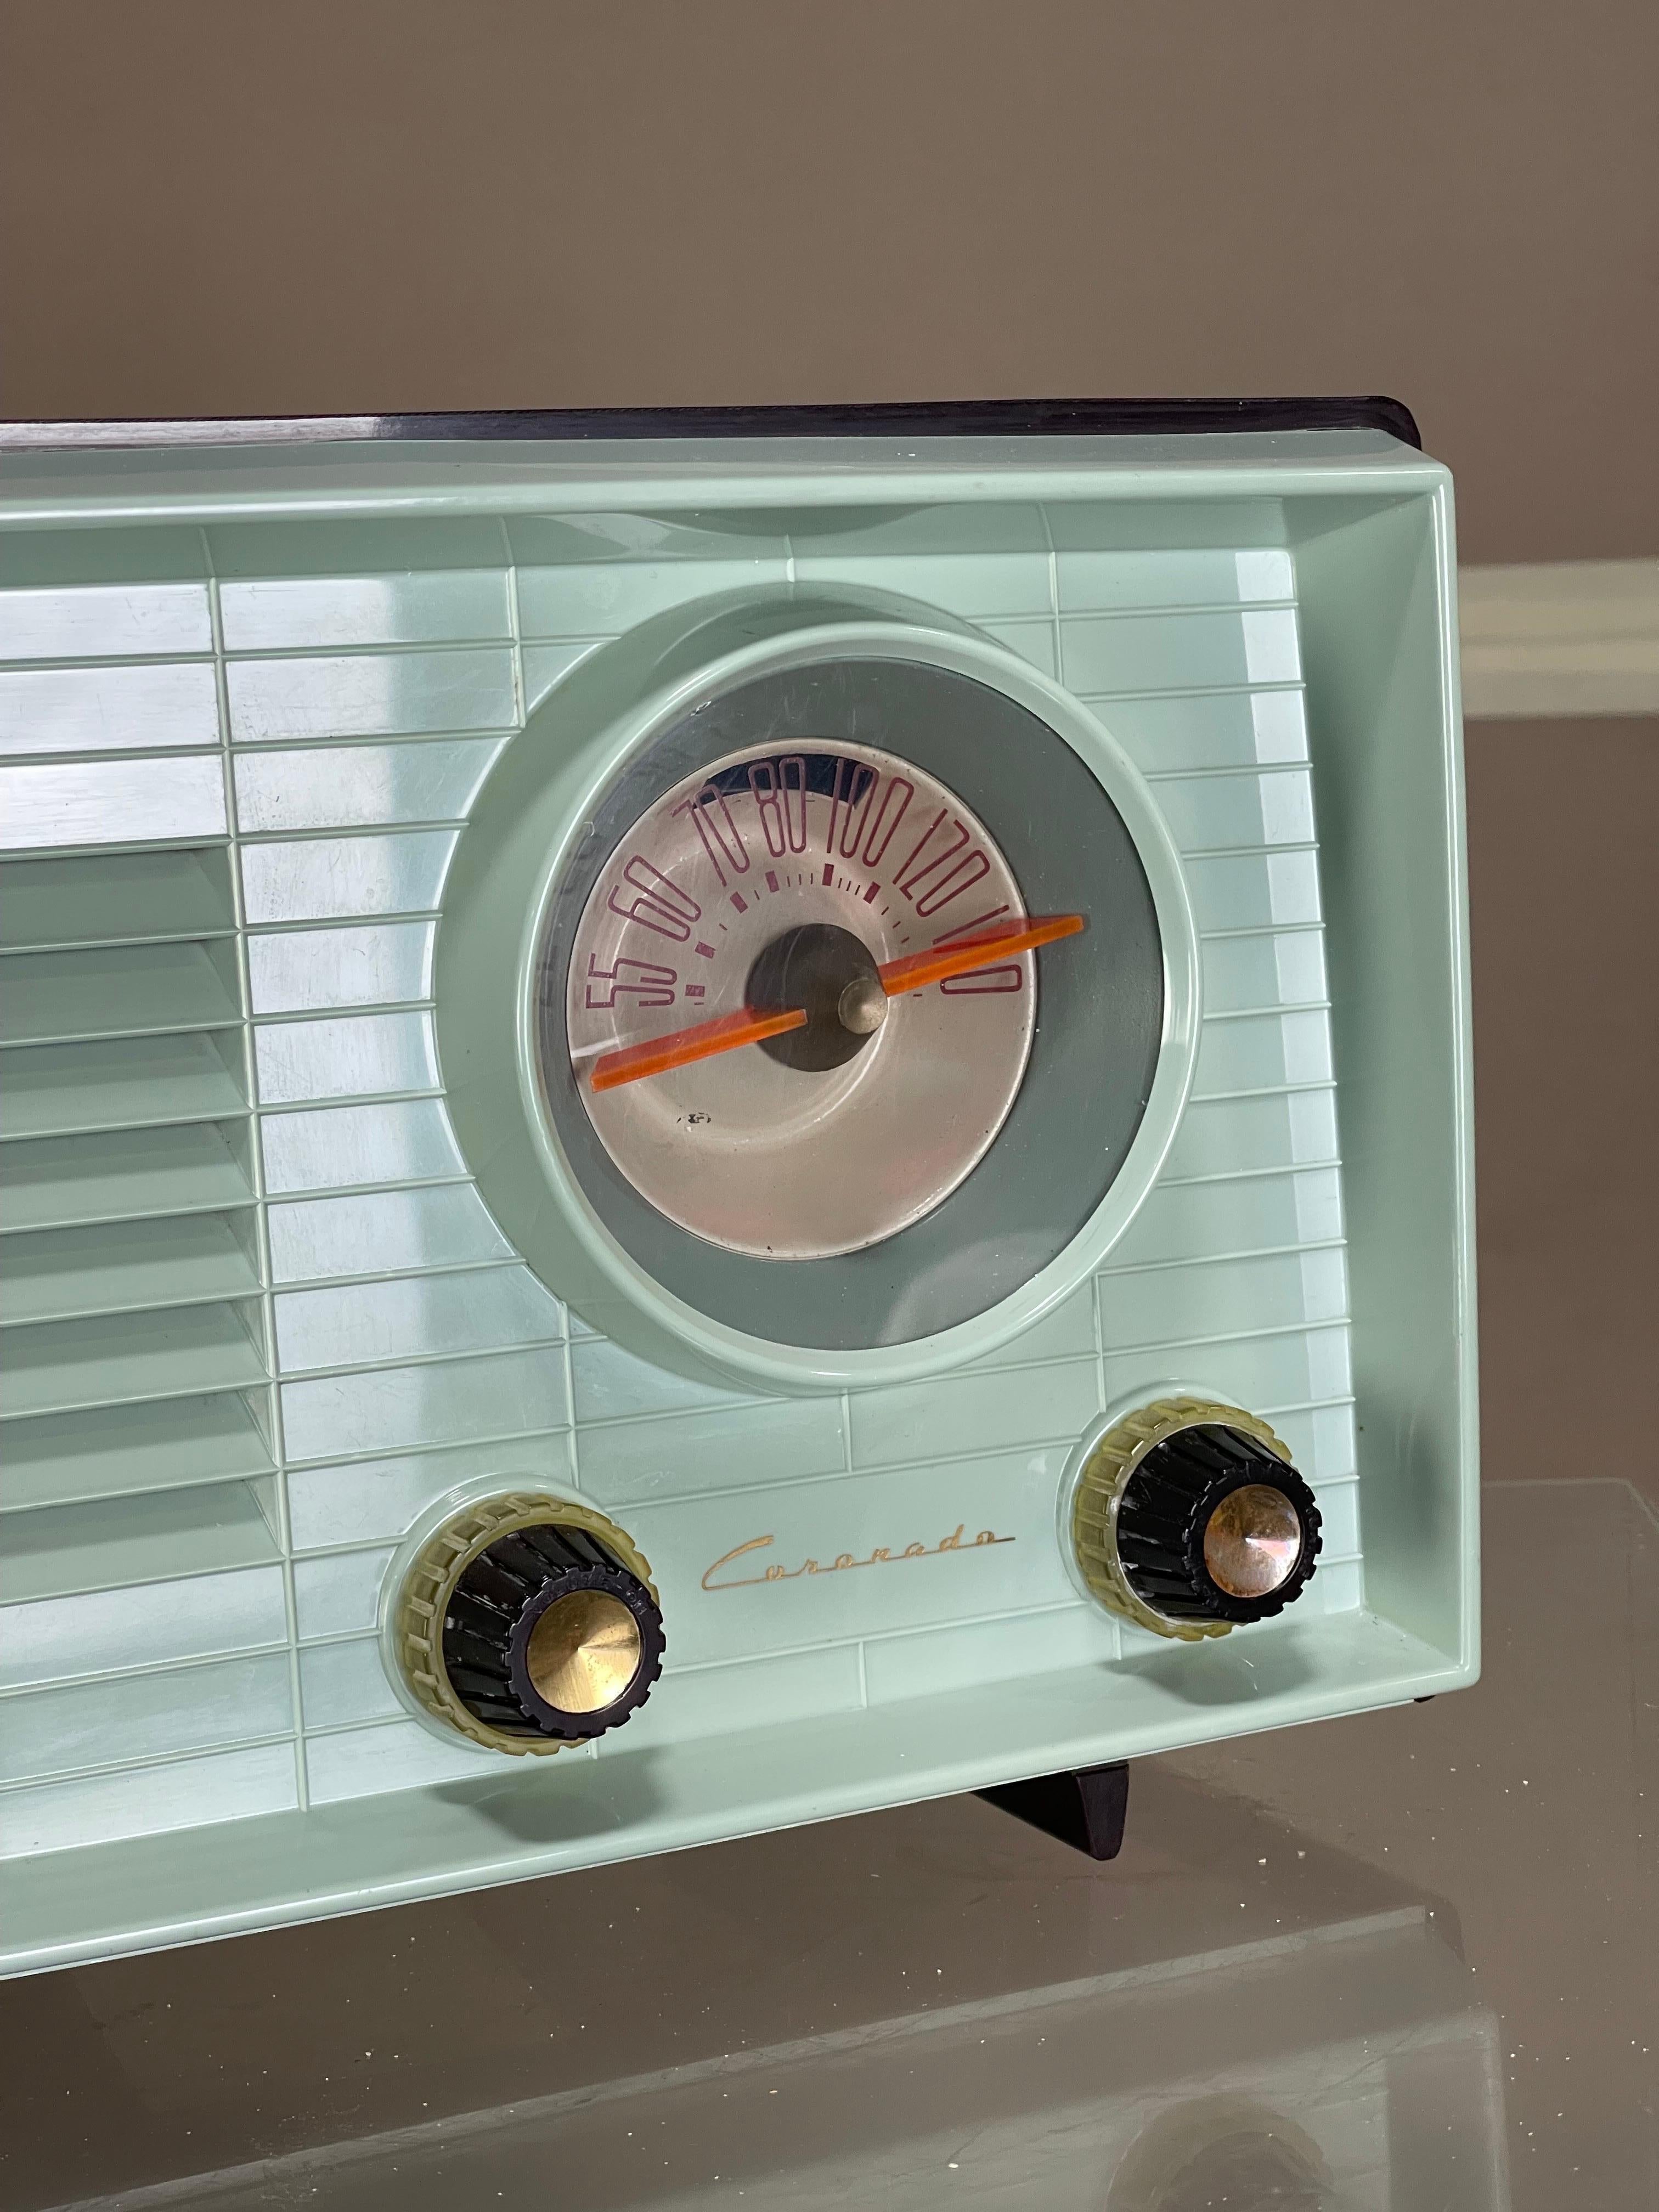 Lovely Coronado AM tube radio Model 05RA37-43-8360A. This radio - a larger tabletop model at 14